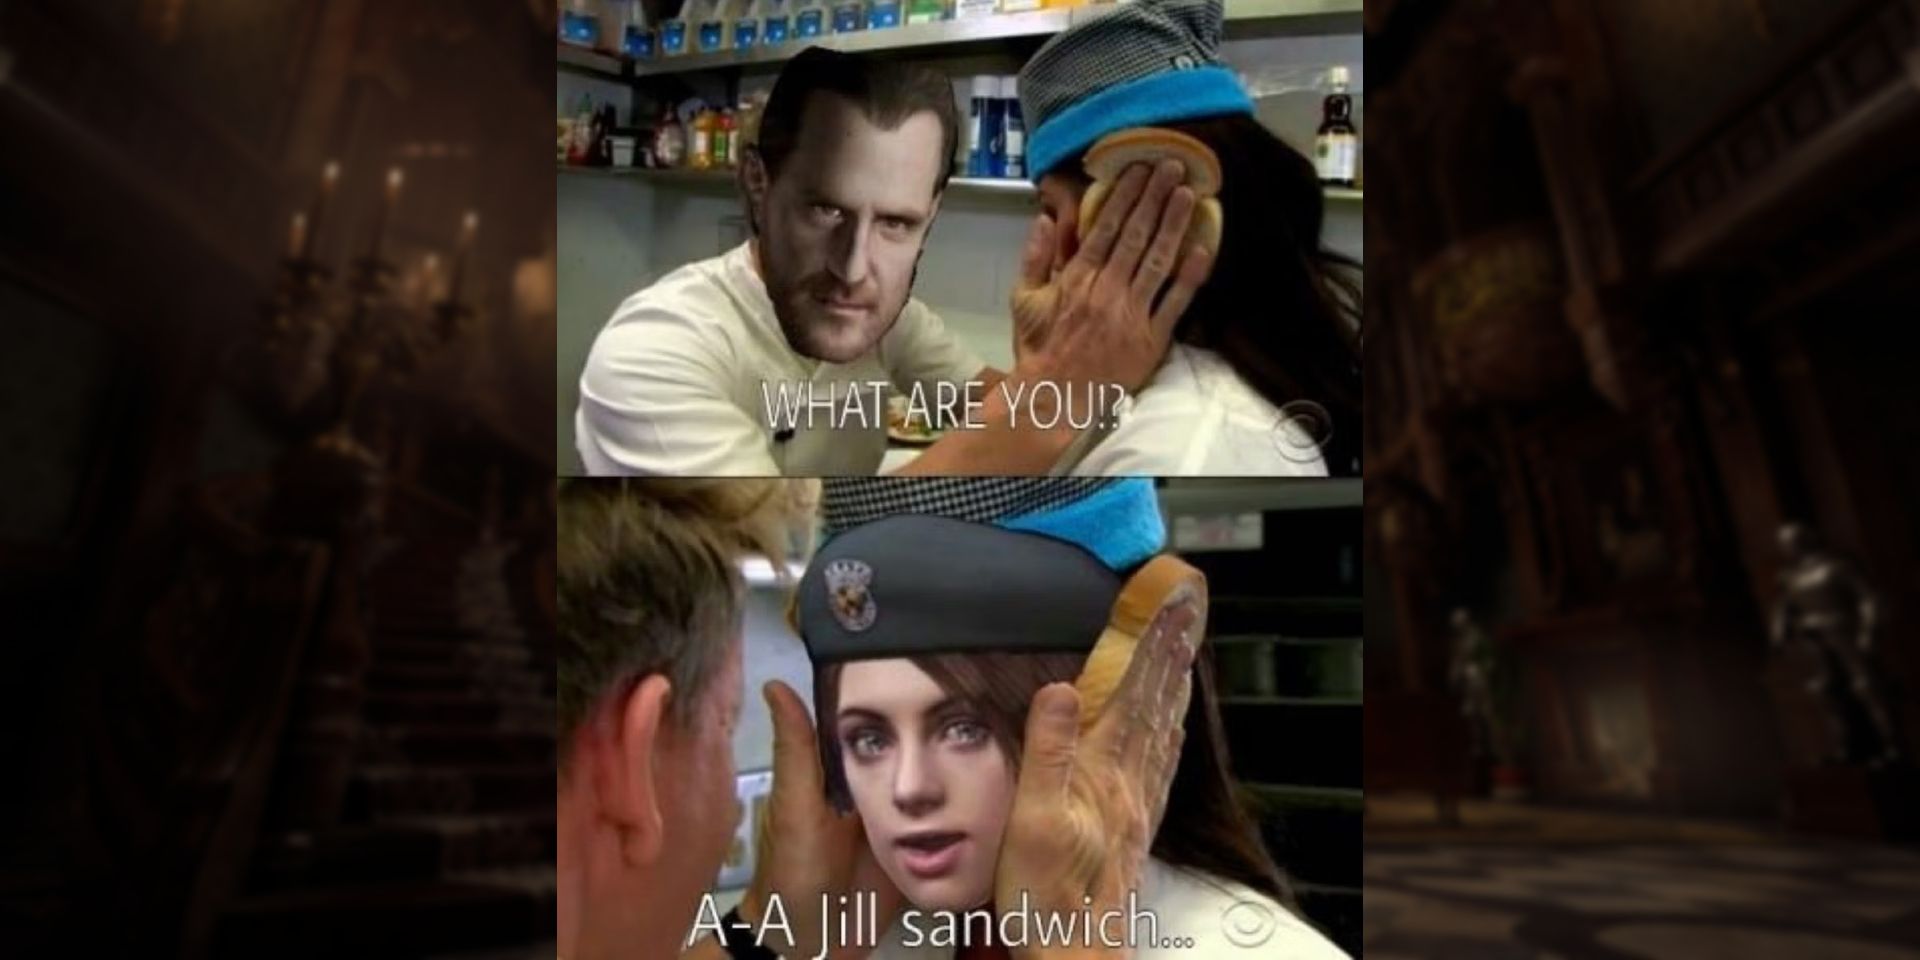 Jill Sandwich Resident Evil meme.